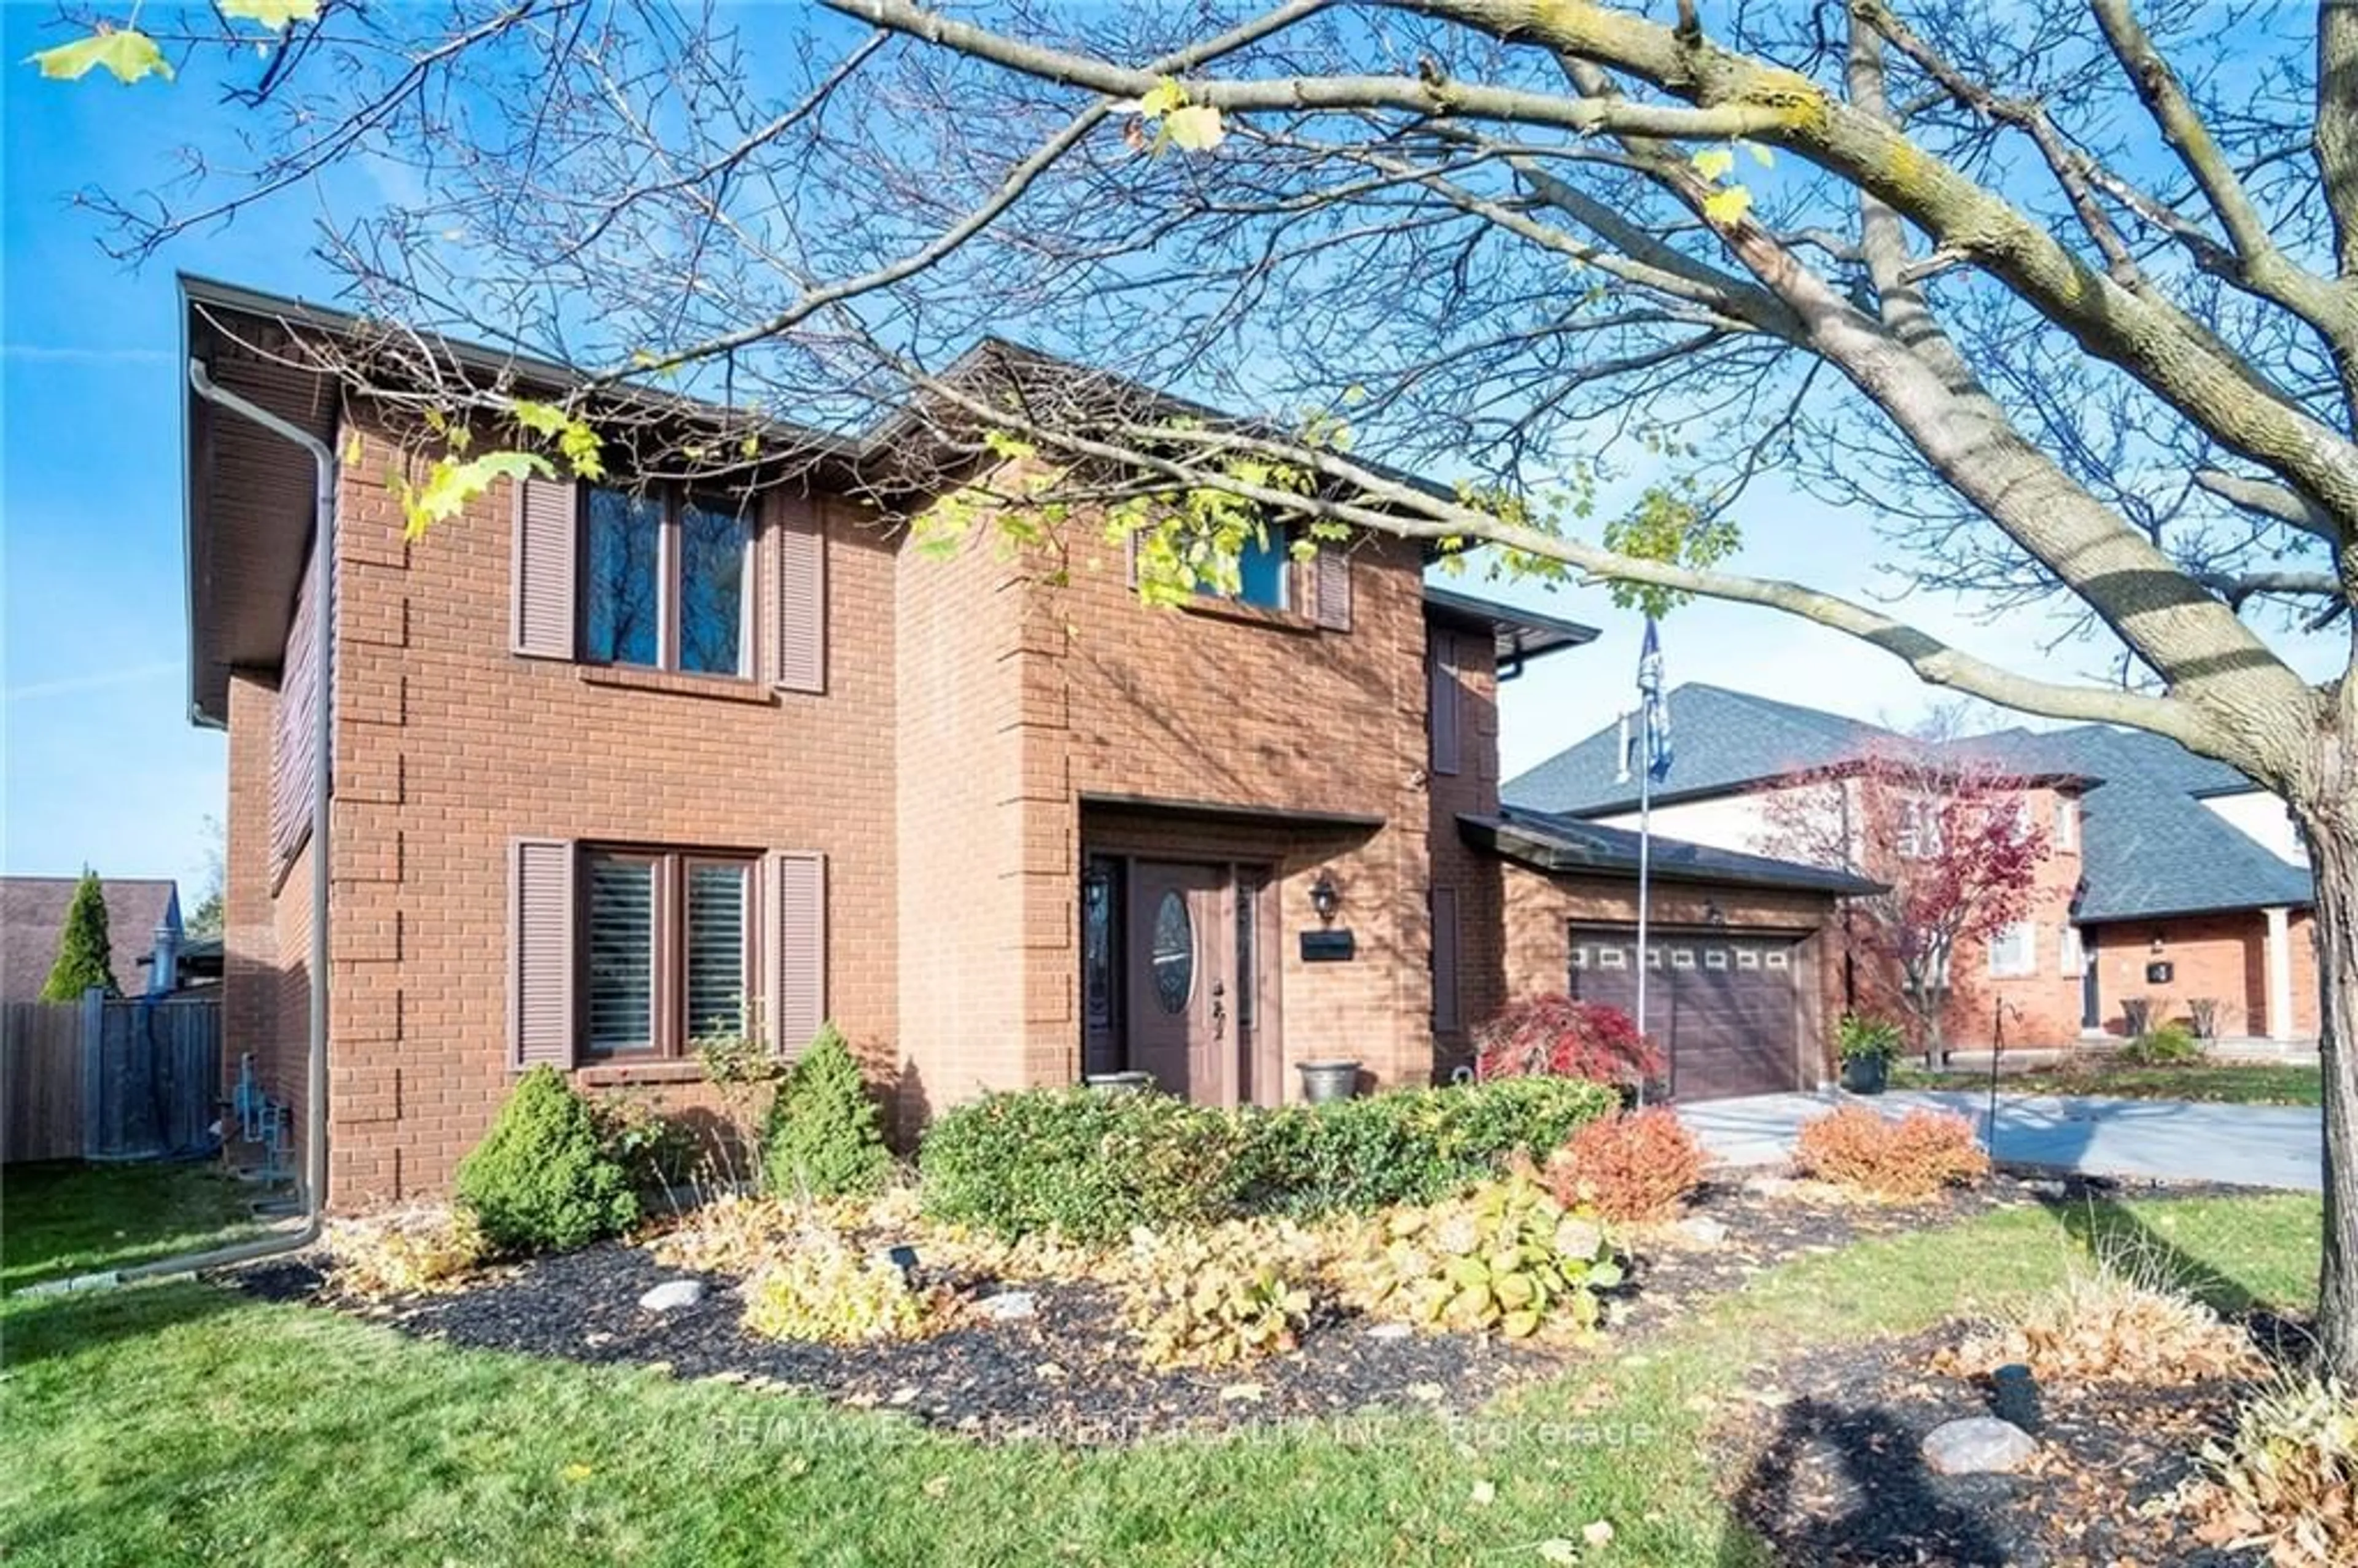 Home with brick exterior material for 465 Melanie Cres, Hamilton Ontario L9G 4B1